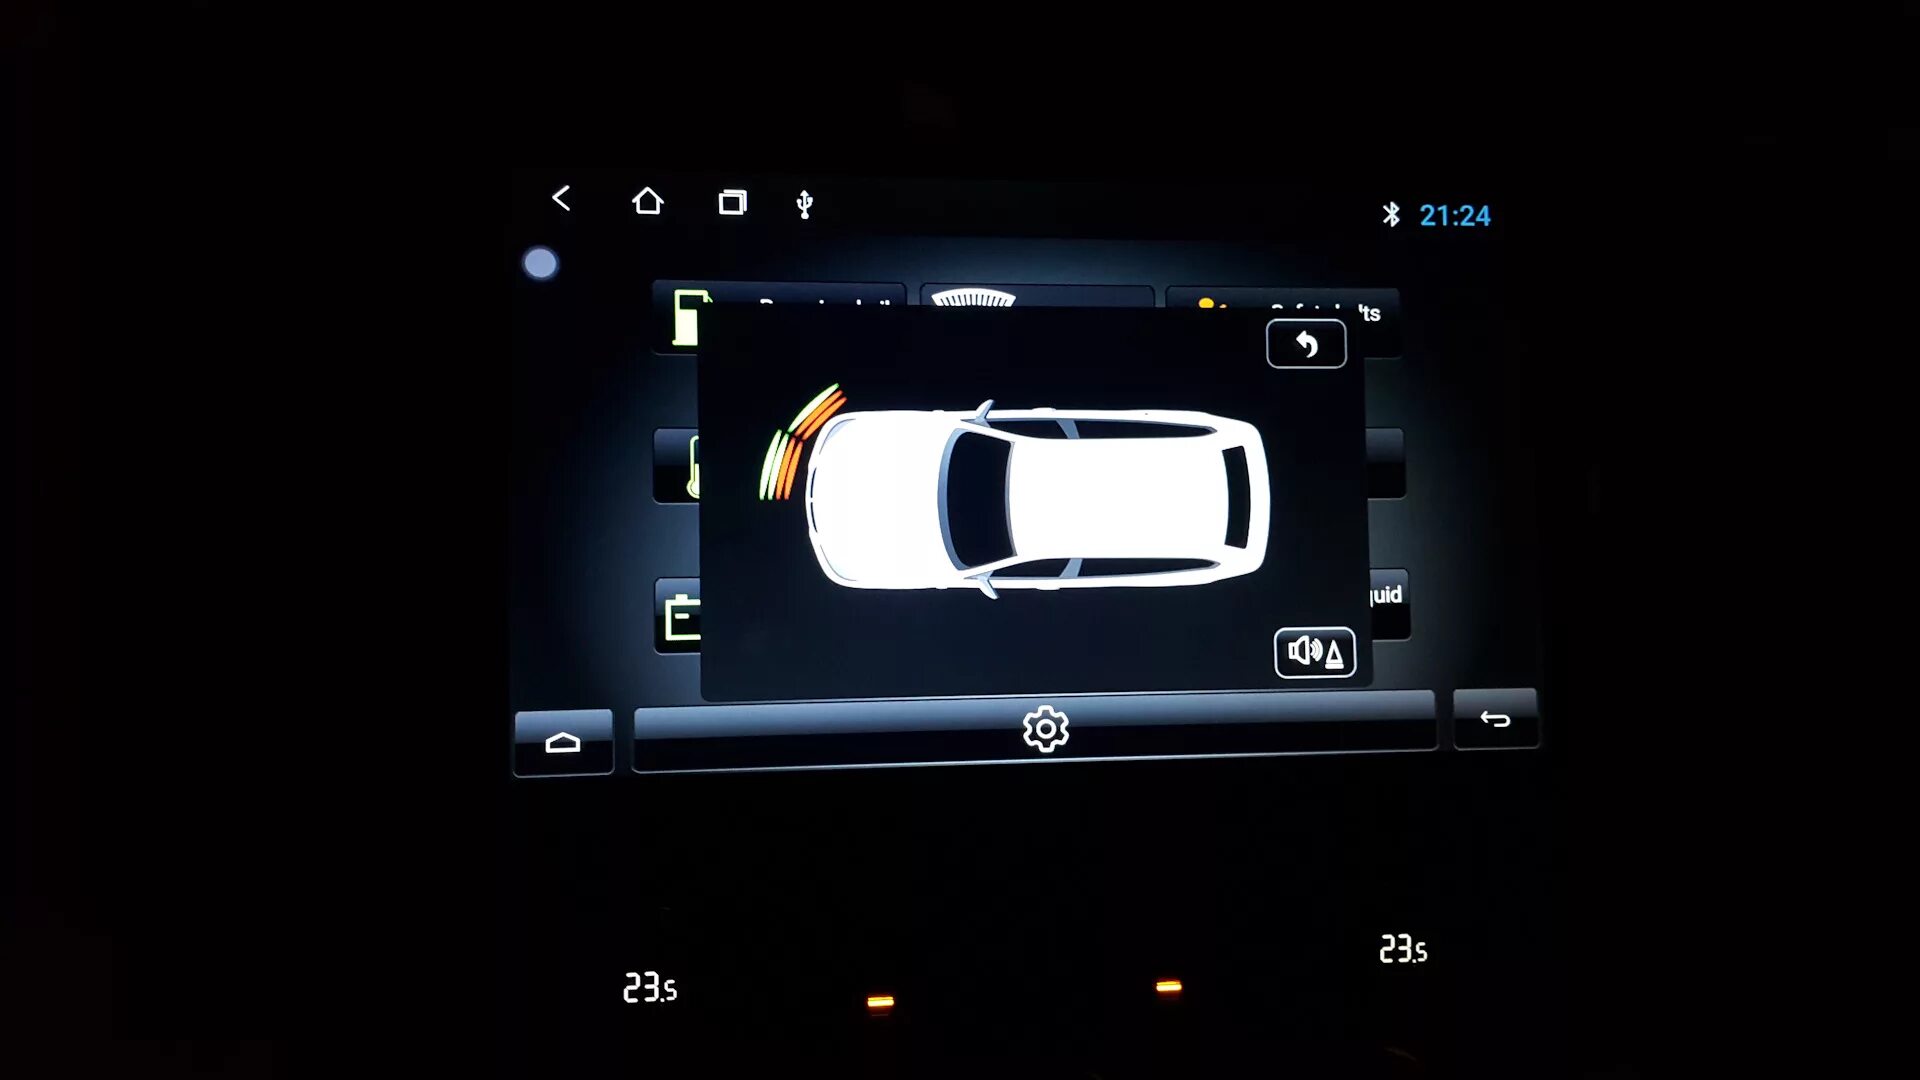 Volkswagen Passat cc 2013 ШГУ Android. Оболочки для ШГУ андроид. Peugeot 508 ШГУ андроид. ШГУ Аутлендер 3.